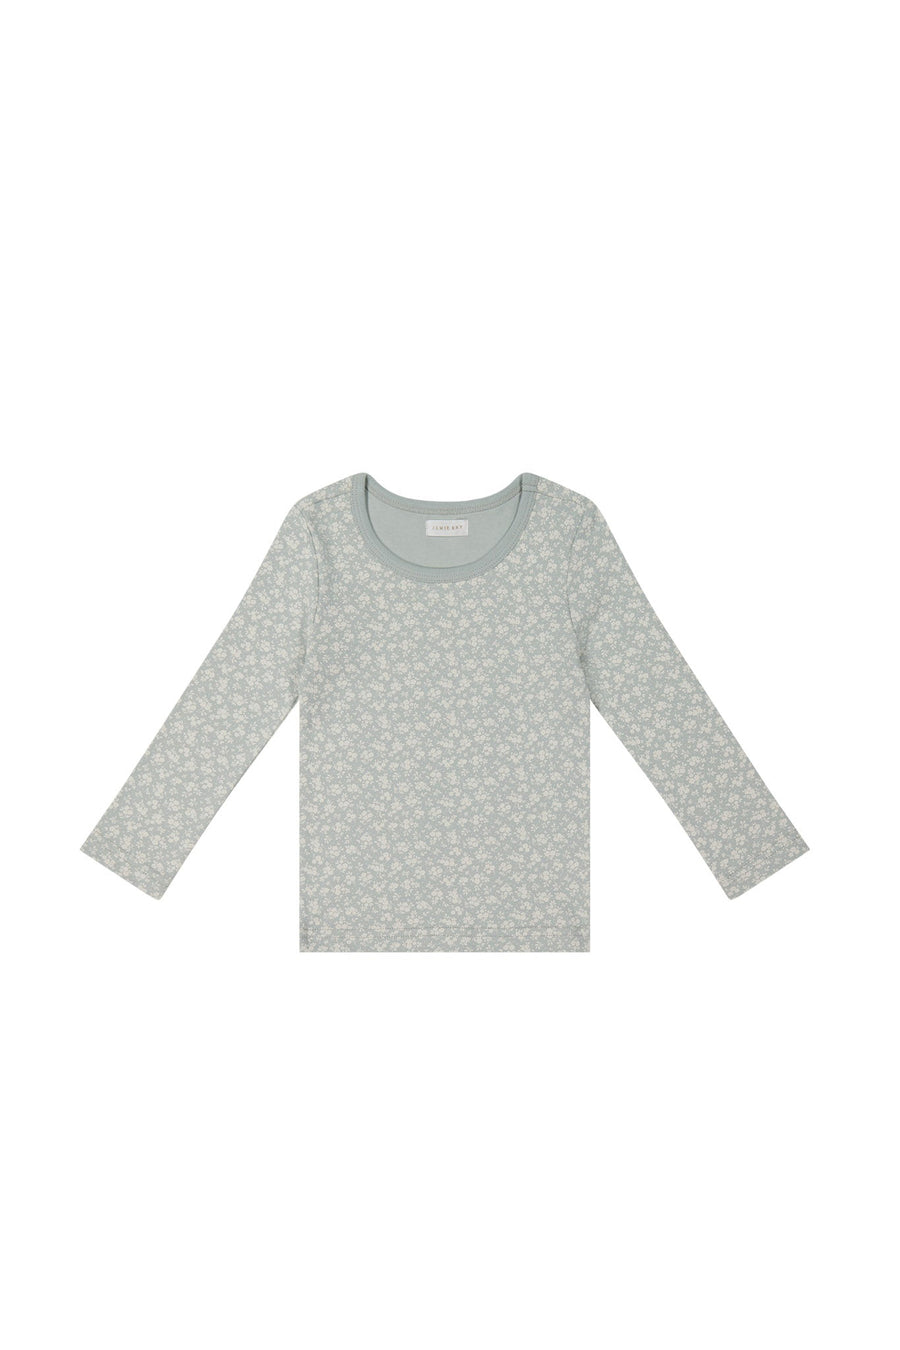 Organic Cotton Bridget Long Sleeve Top - Rosalie Fields Bluefox Childrens Top from Jamie Kay USA